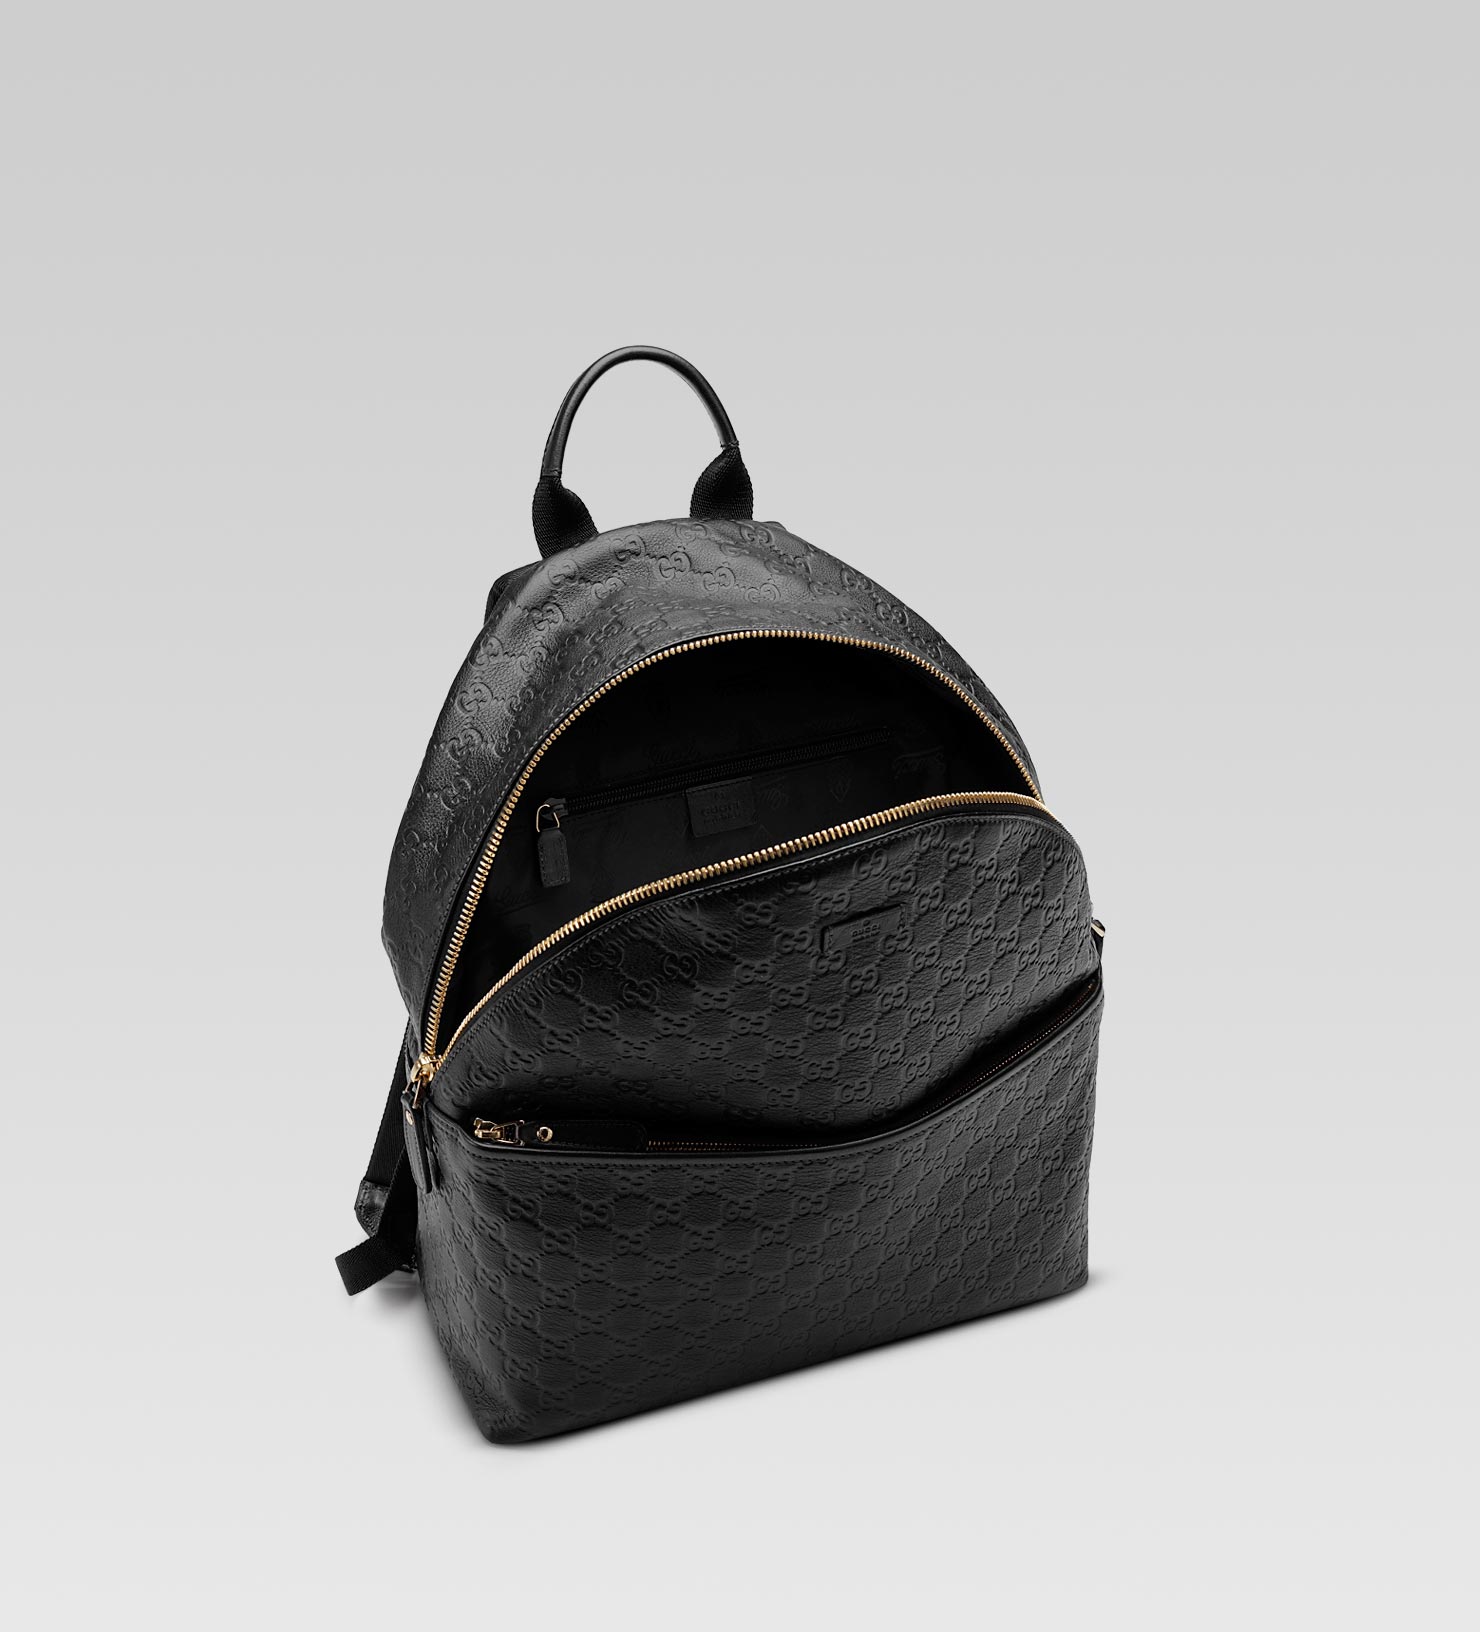 Lyst - Gucci Zip Backpack in Black for Men